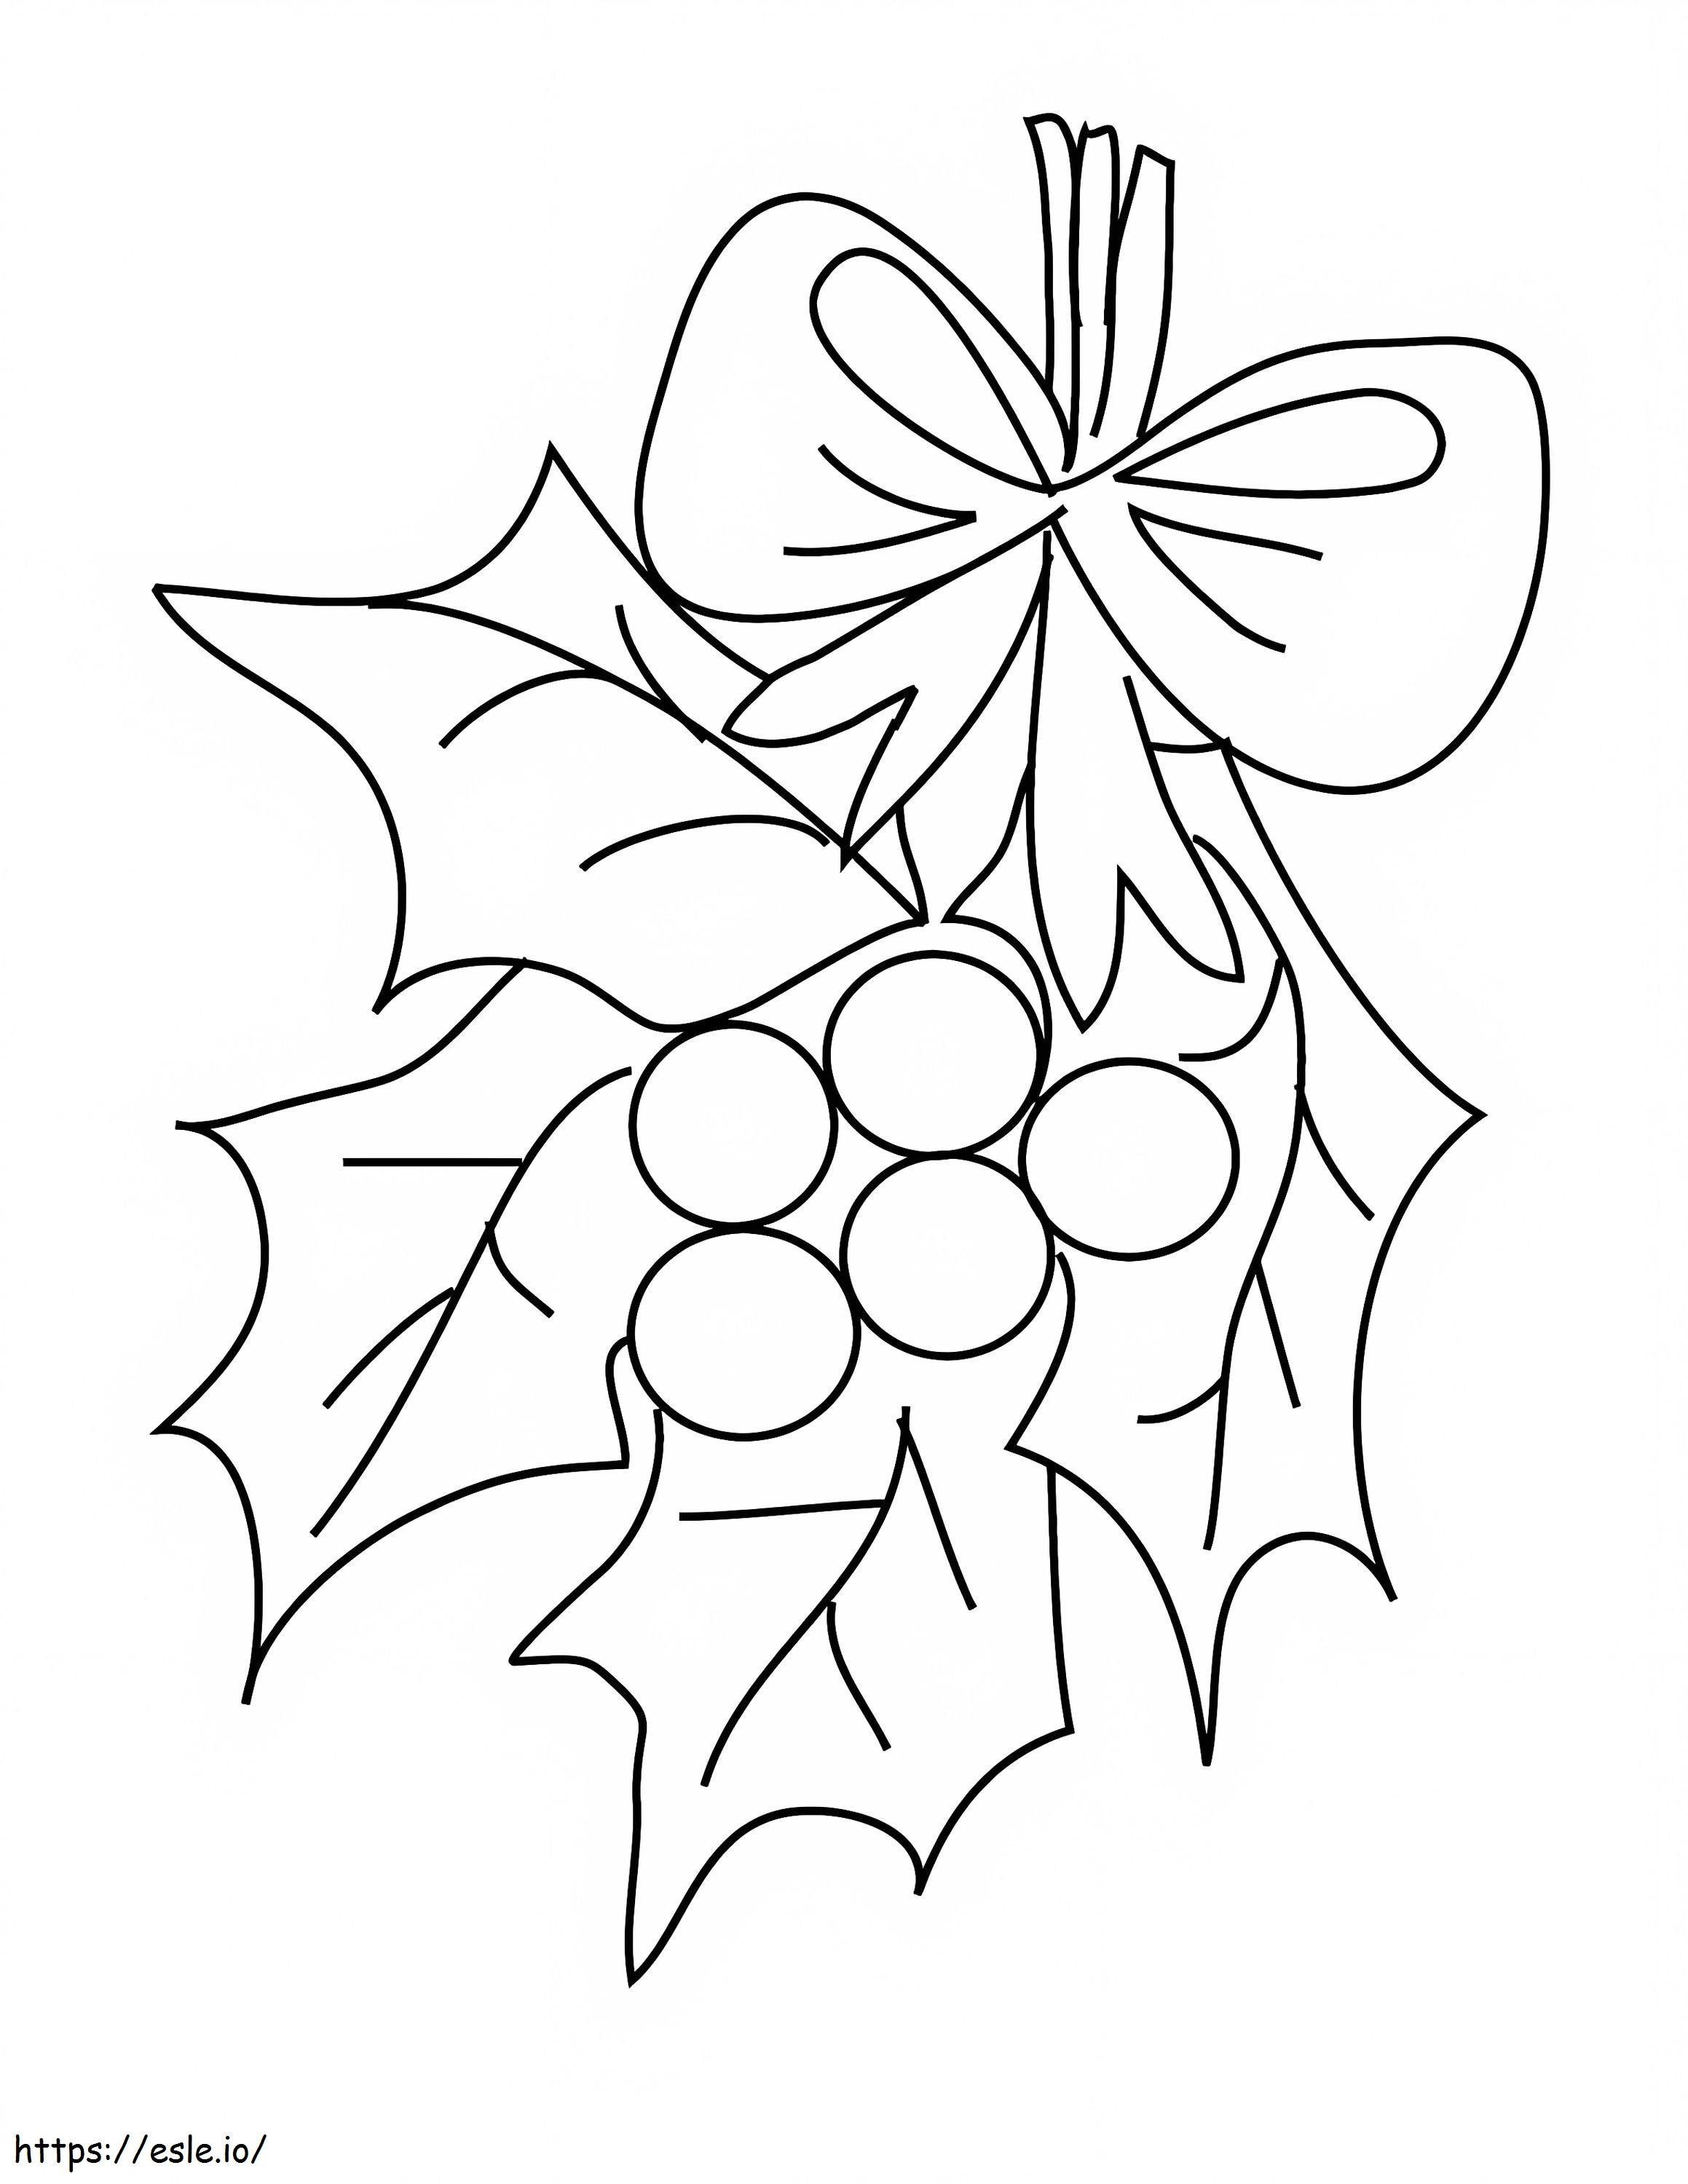 Mistletoe 9 coloring page